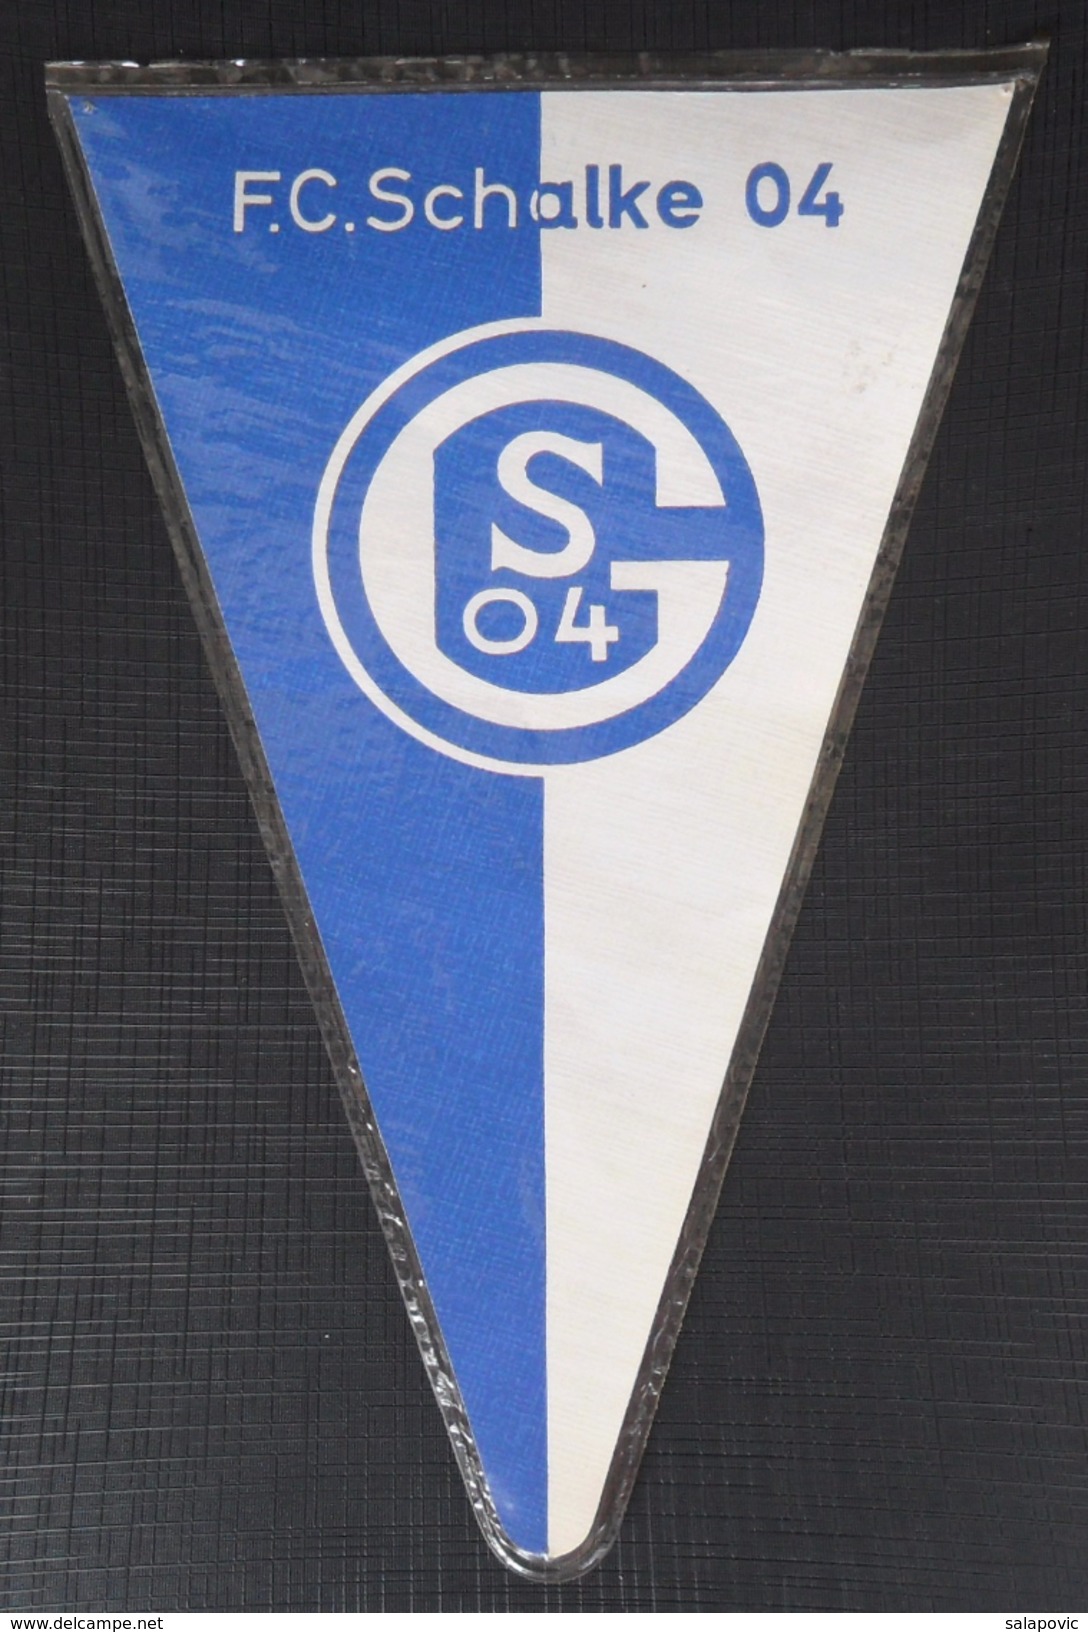 FC Gelsenkirchen-Schalke 04 GERMANY FOOTBALL CLUB, SOCCER / FUTBOL / CALCIO OLD PENNANT, SPORTS FLAG - Apparel, Souvenirs & Other